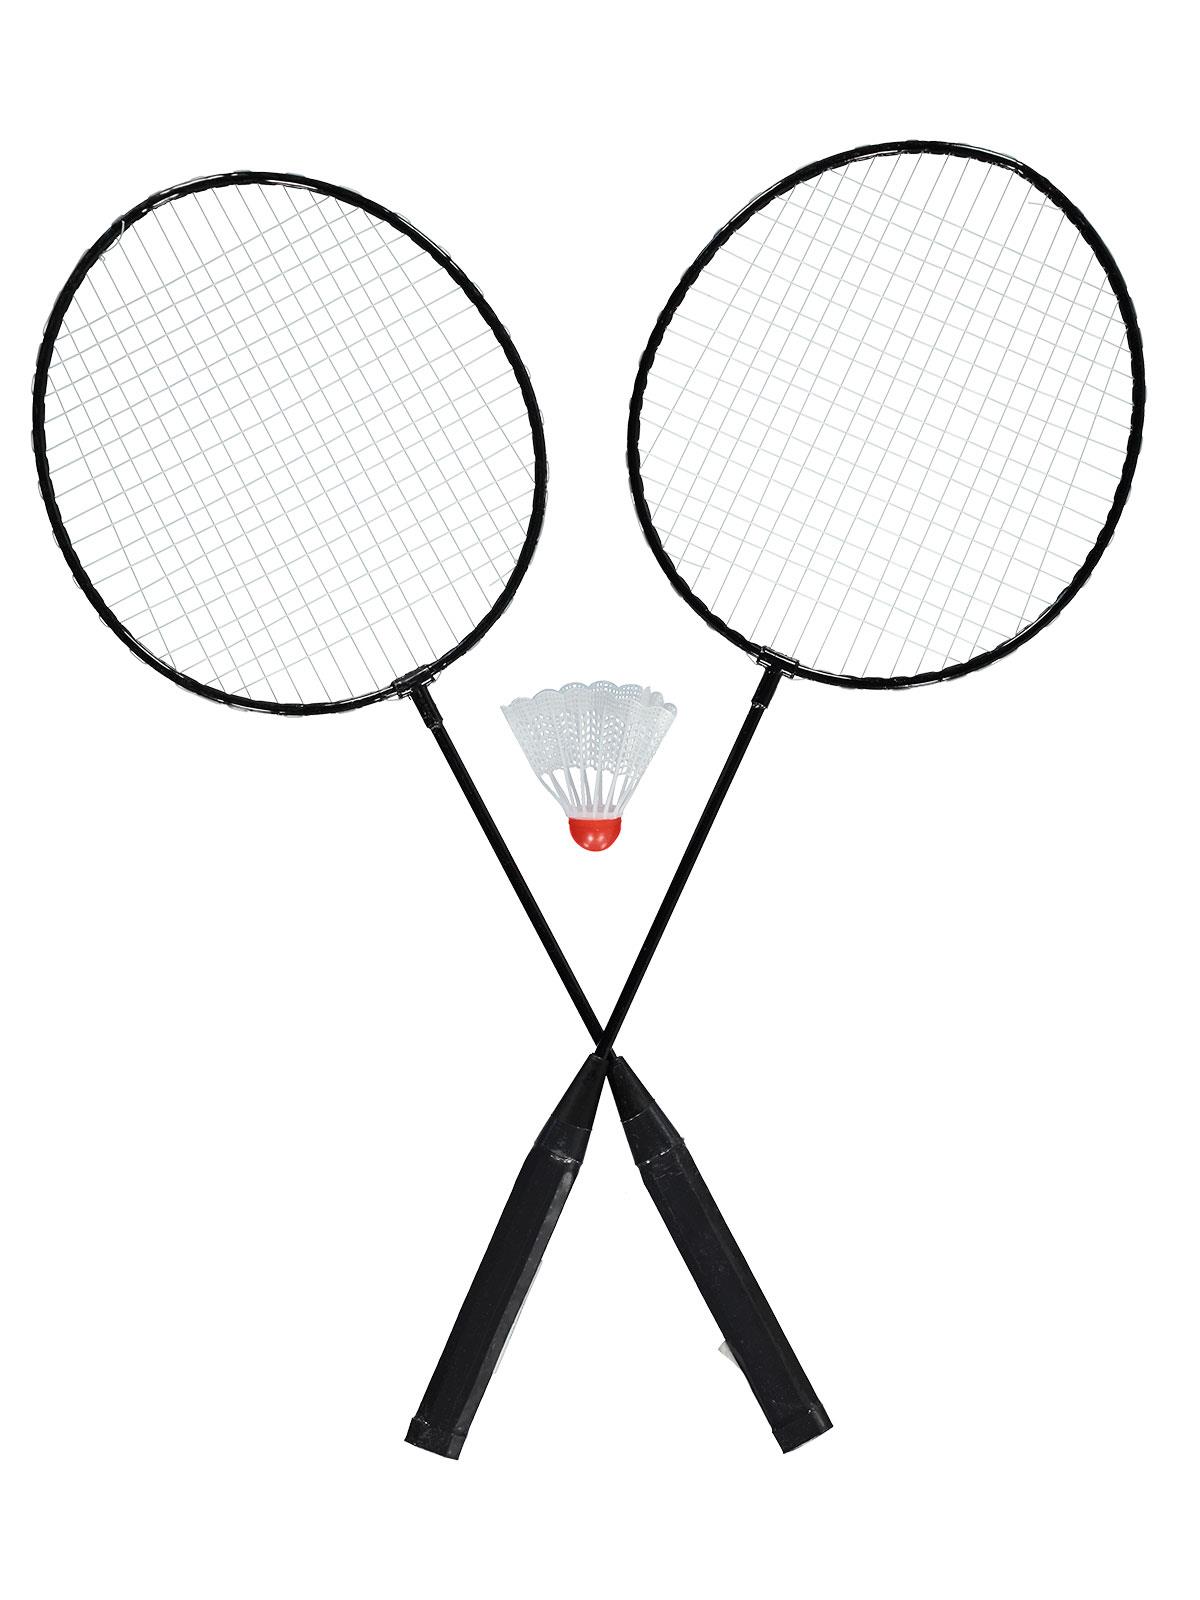 Can Oyuncak Fileli Badminton Siyah